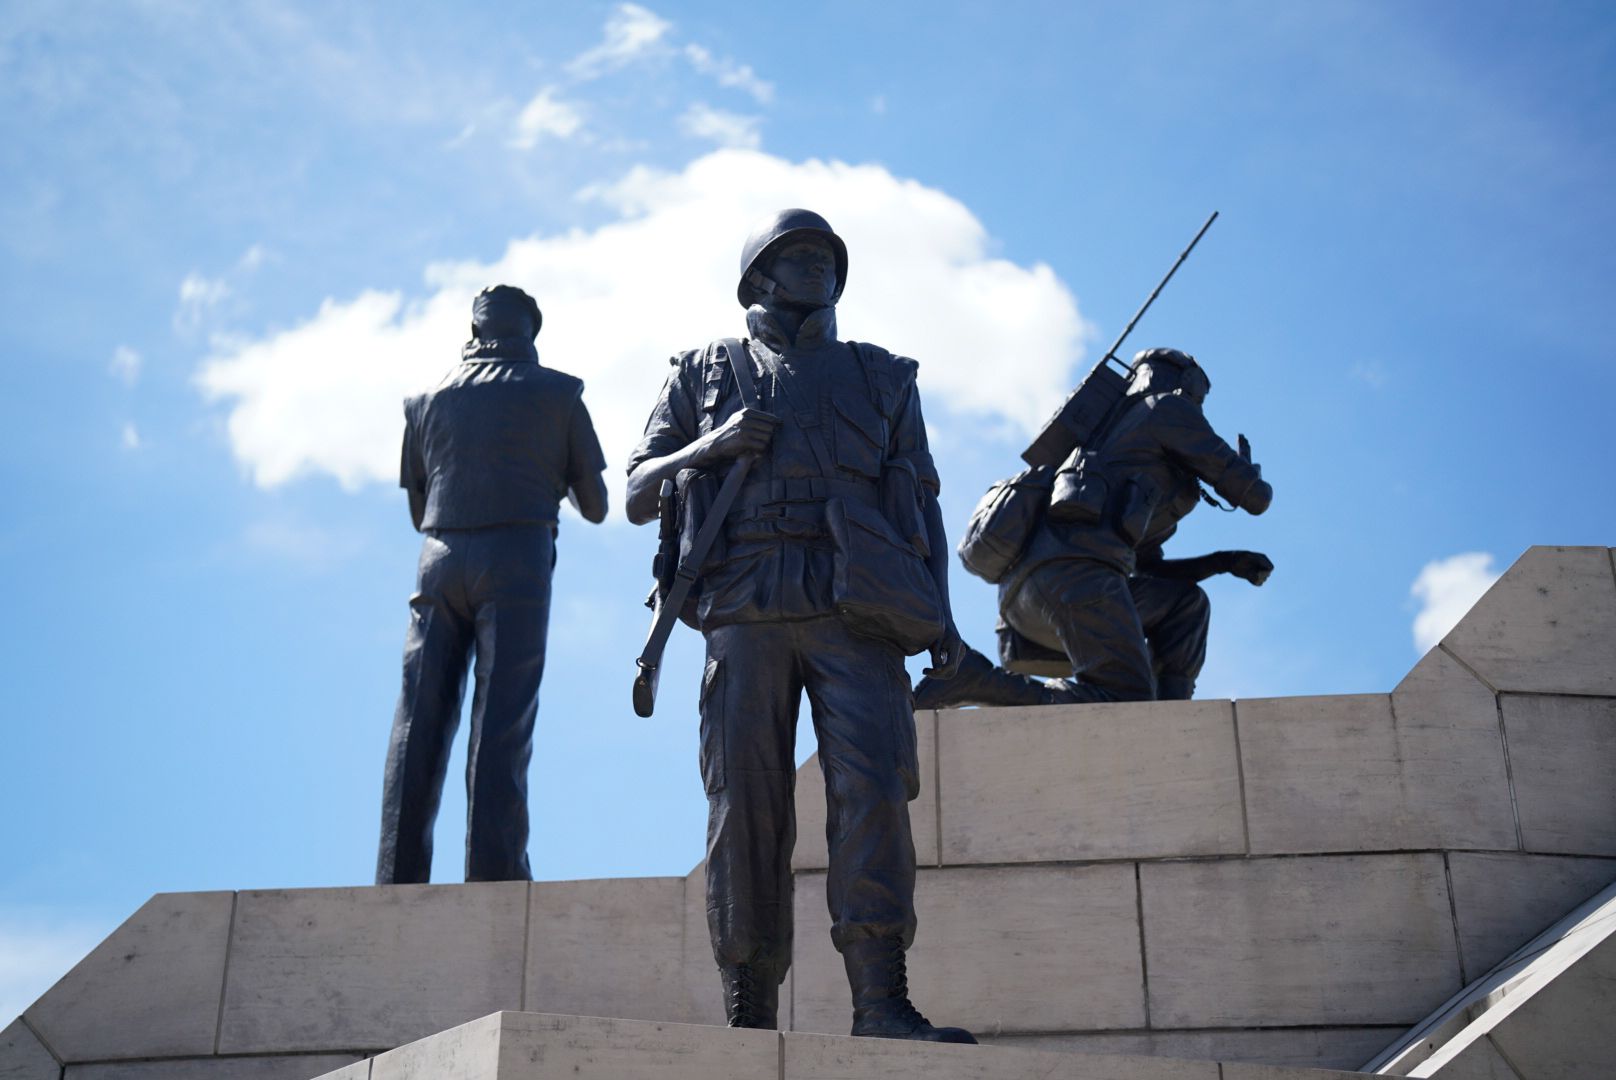 Statues - three uniformed figures in alert.